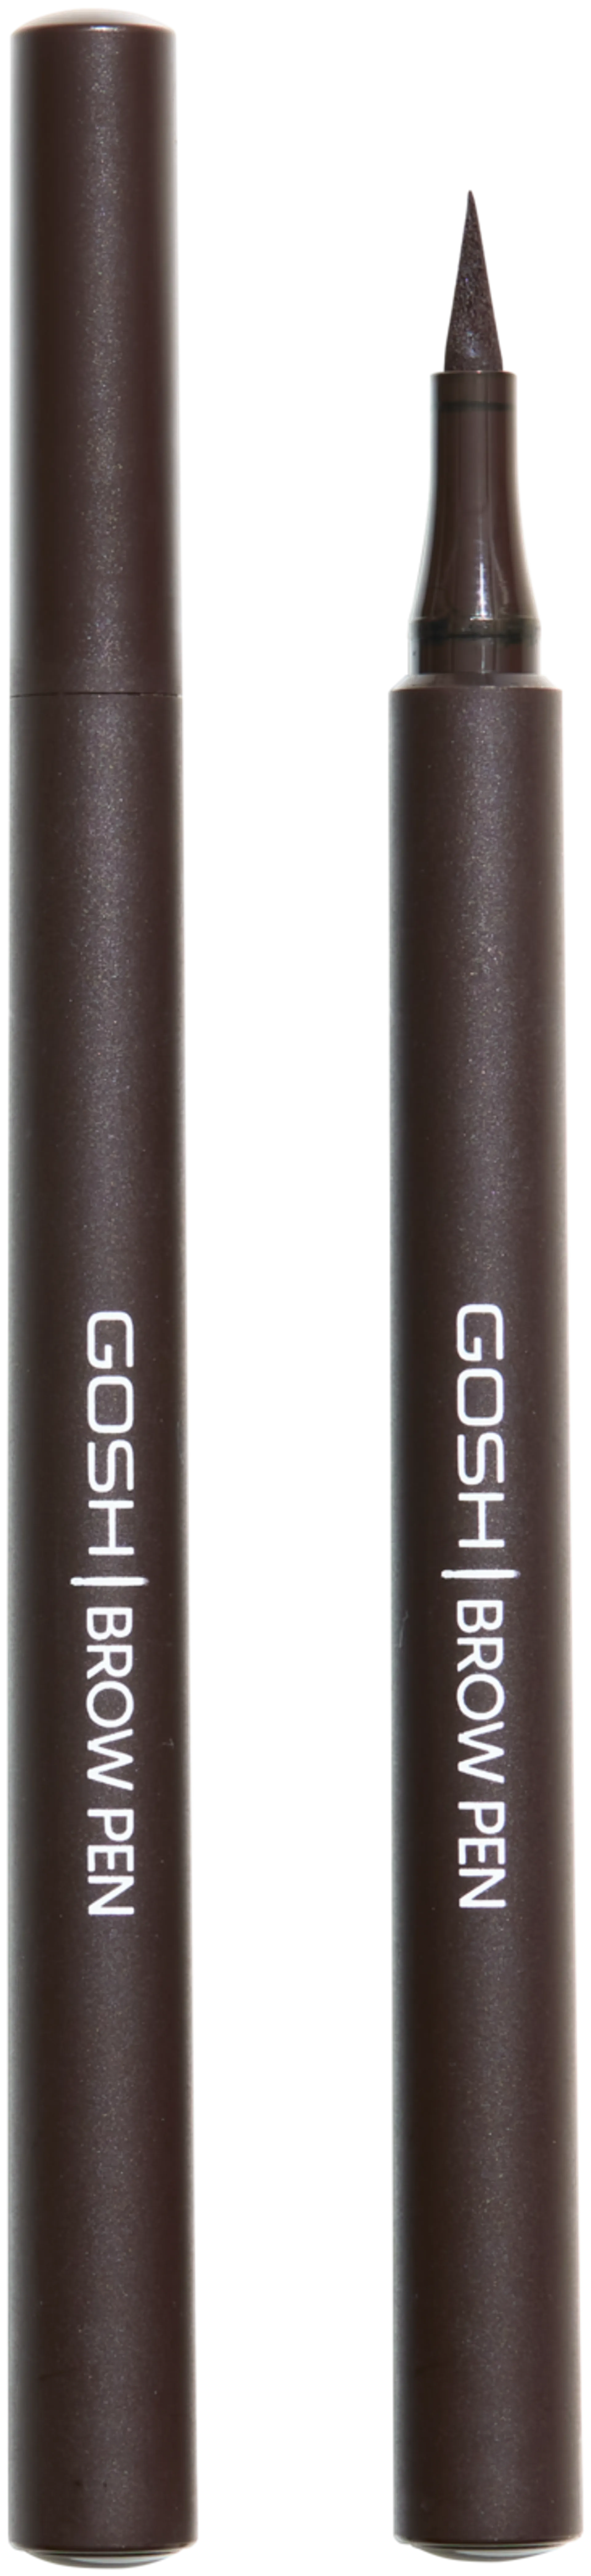 Gosh Brow Pen kulmatussi 1,1 ml - Dark brown